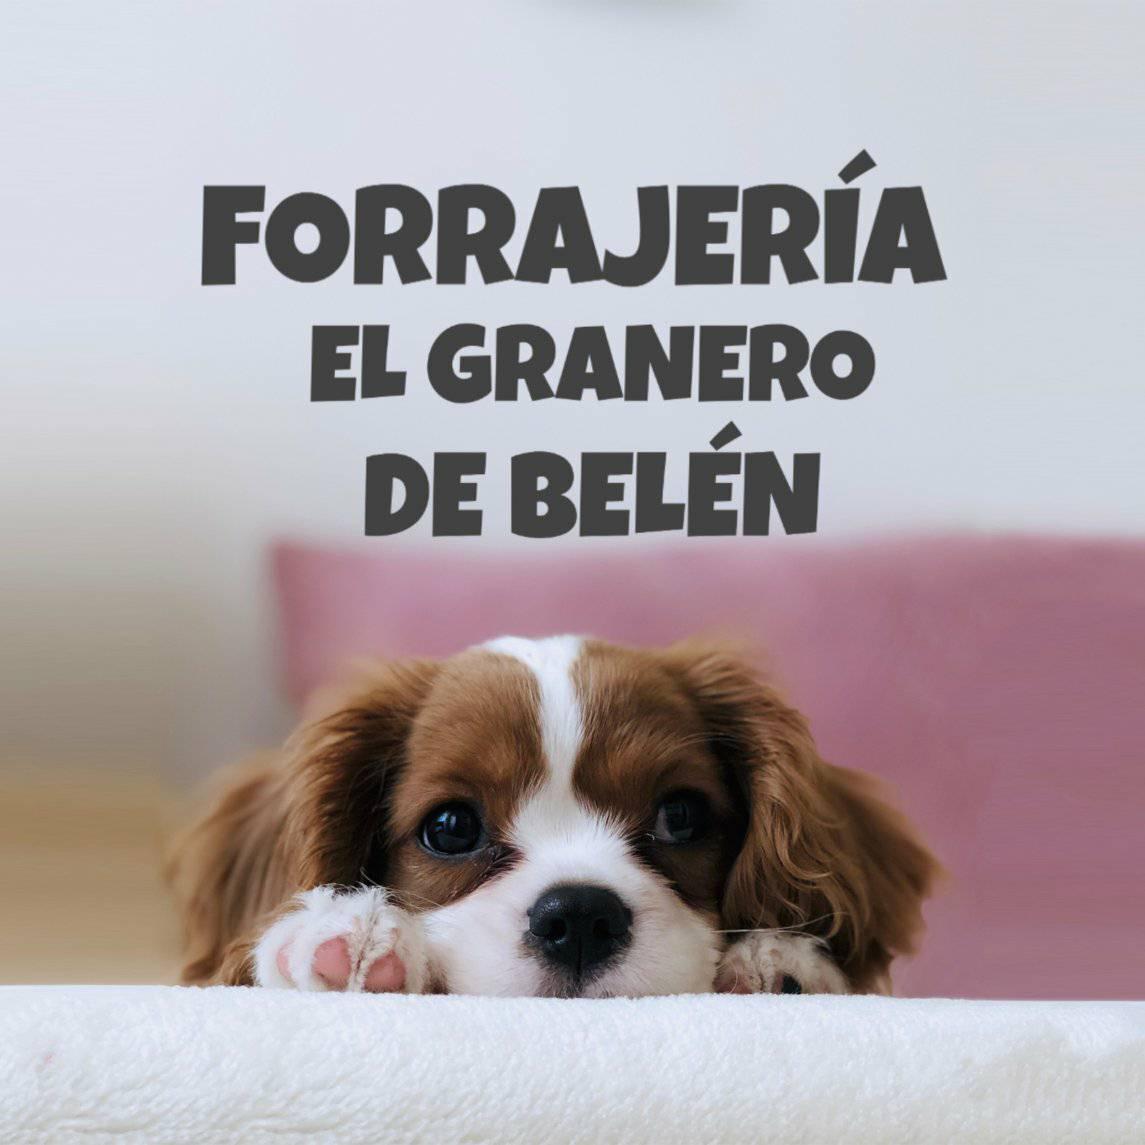 FORRAJERIA EL GRANERO DE BELEN